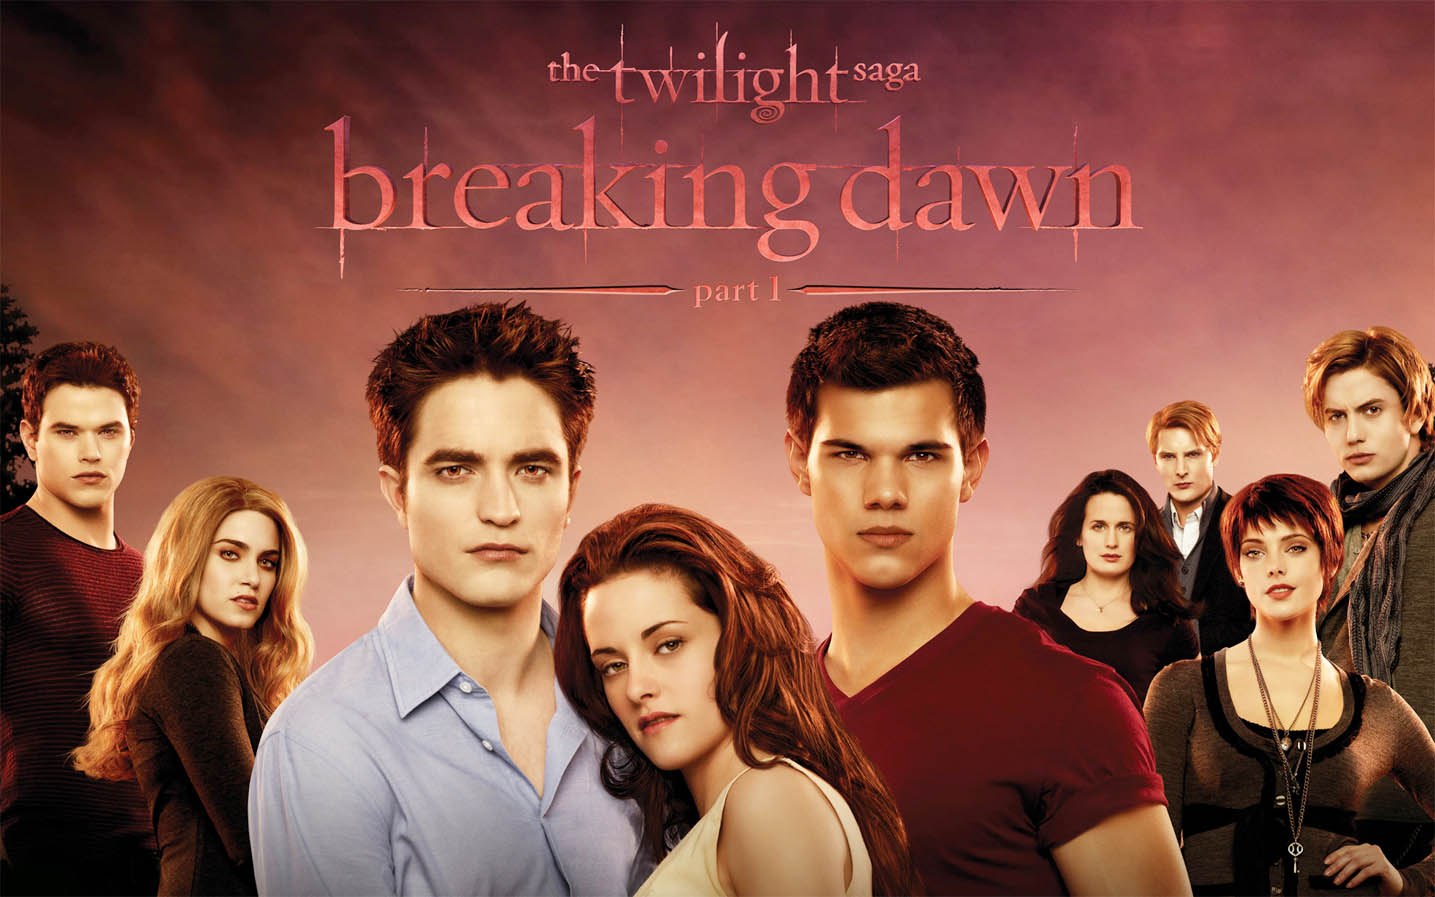 Twilight saga breaking dawn part 1 full mkv movie download free